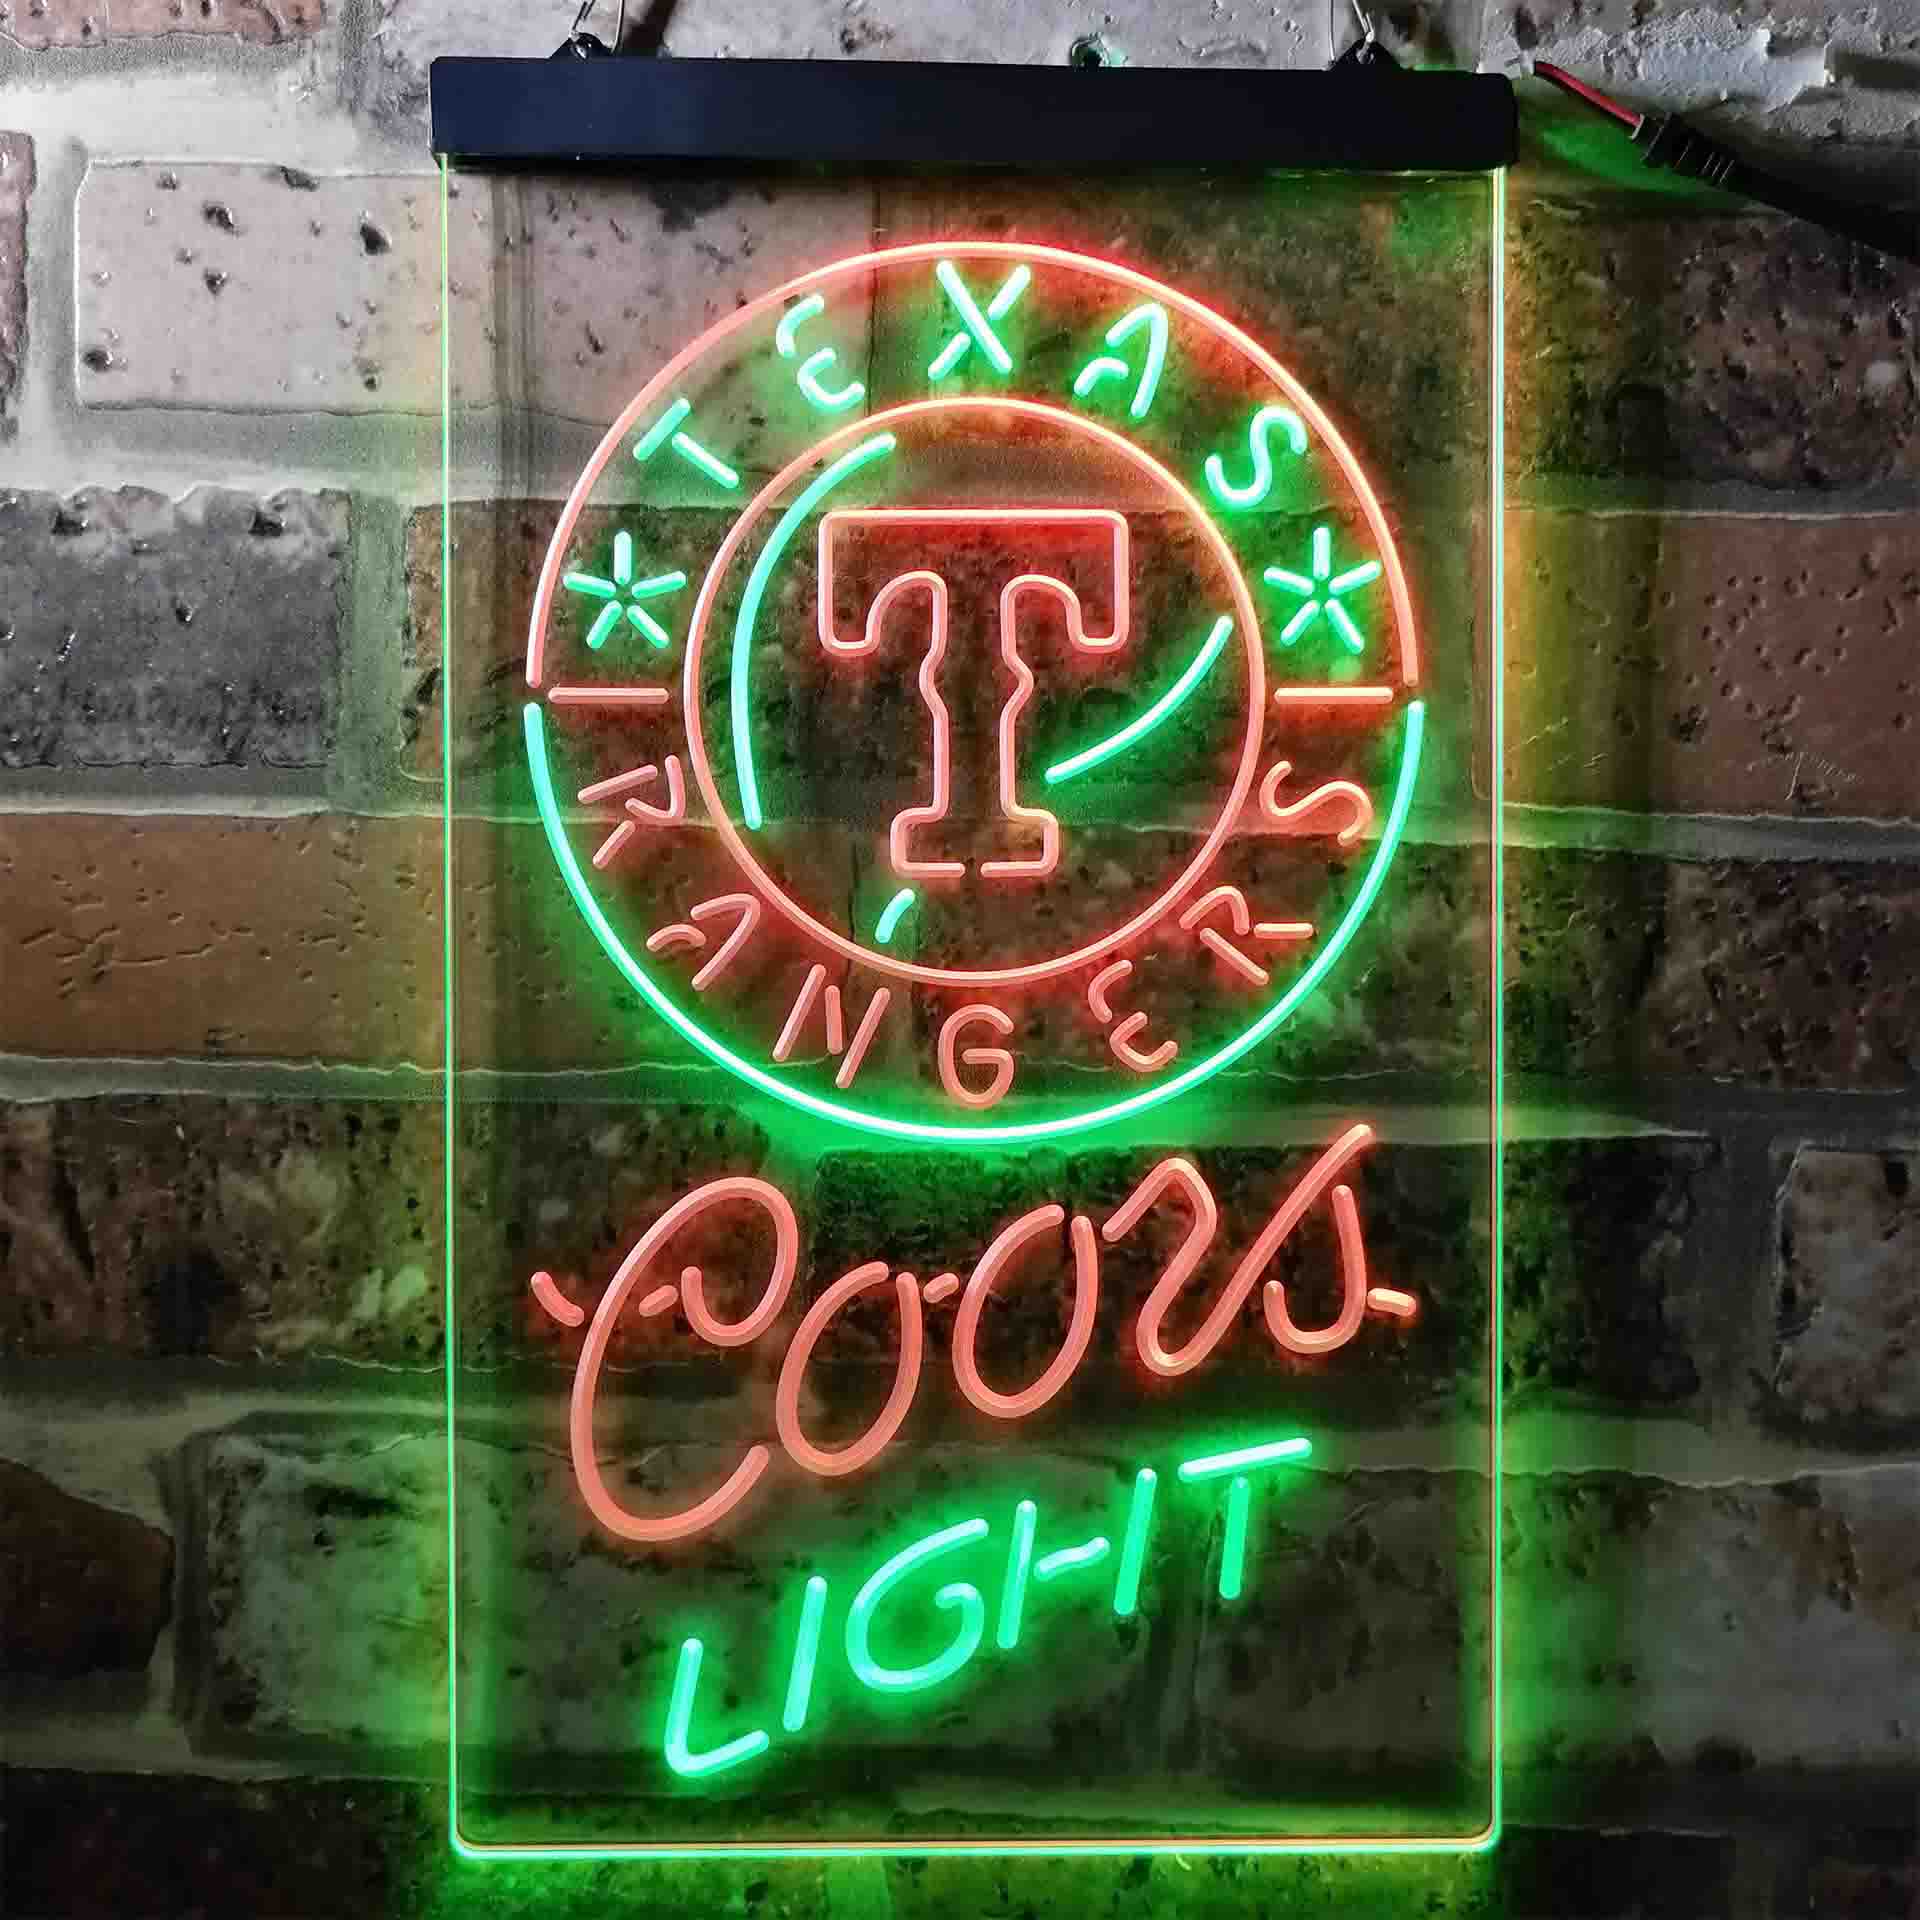 Texas Rangers Coors Light Neon-Like LED Sign